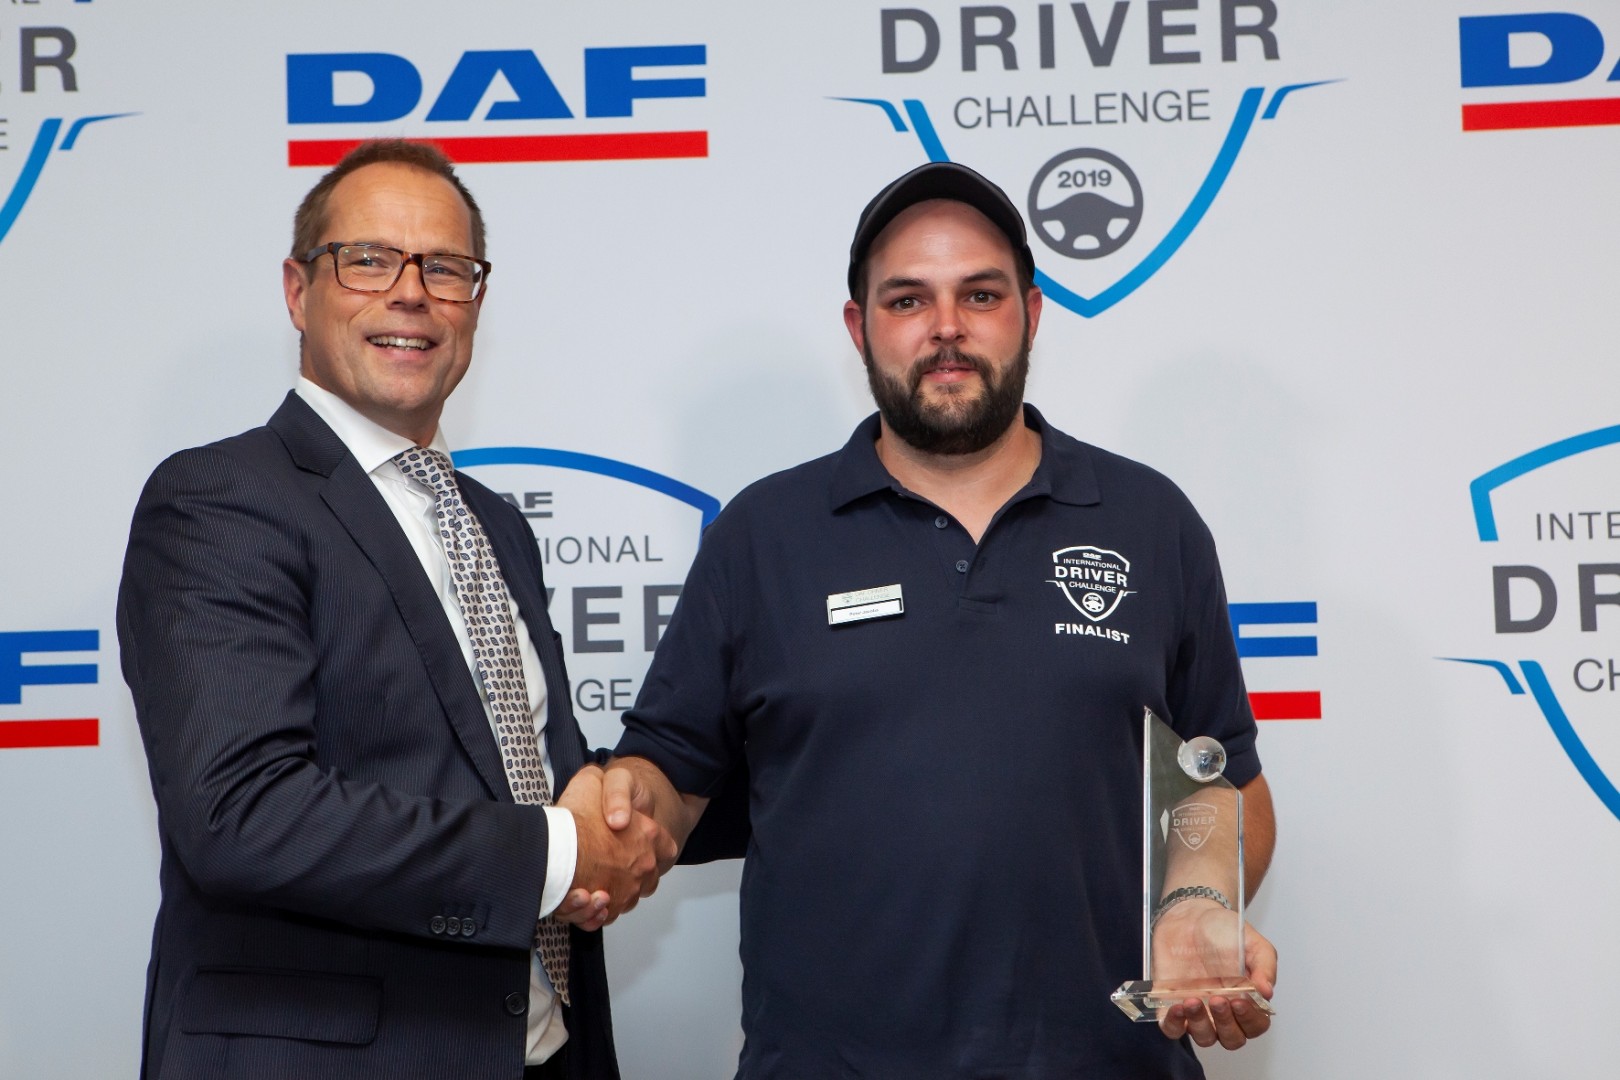 DAF Driver Challenge Champion 2019